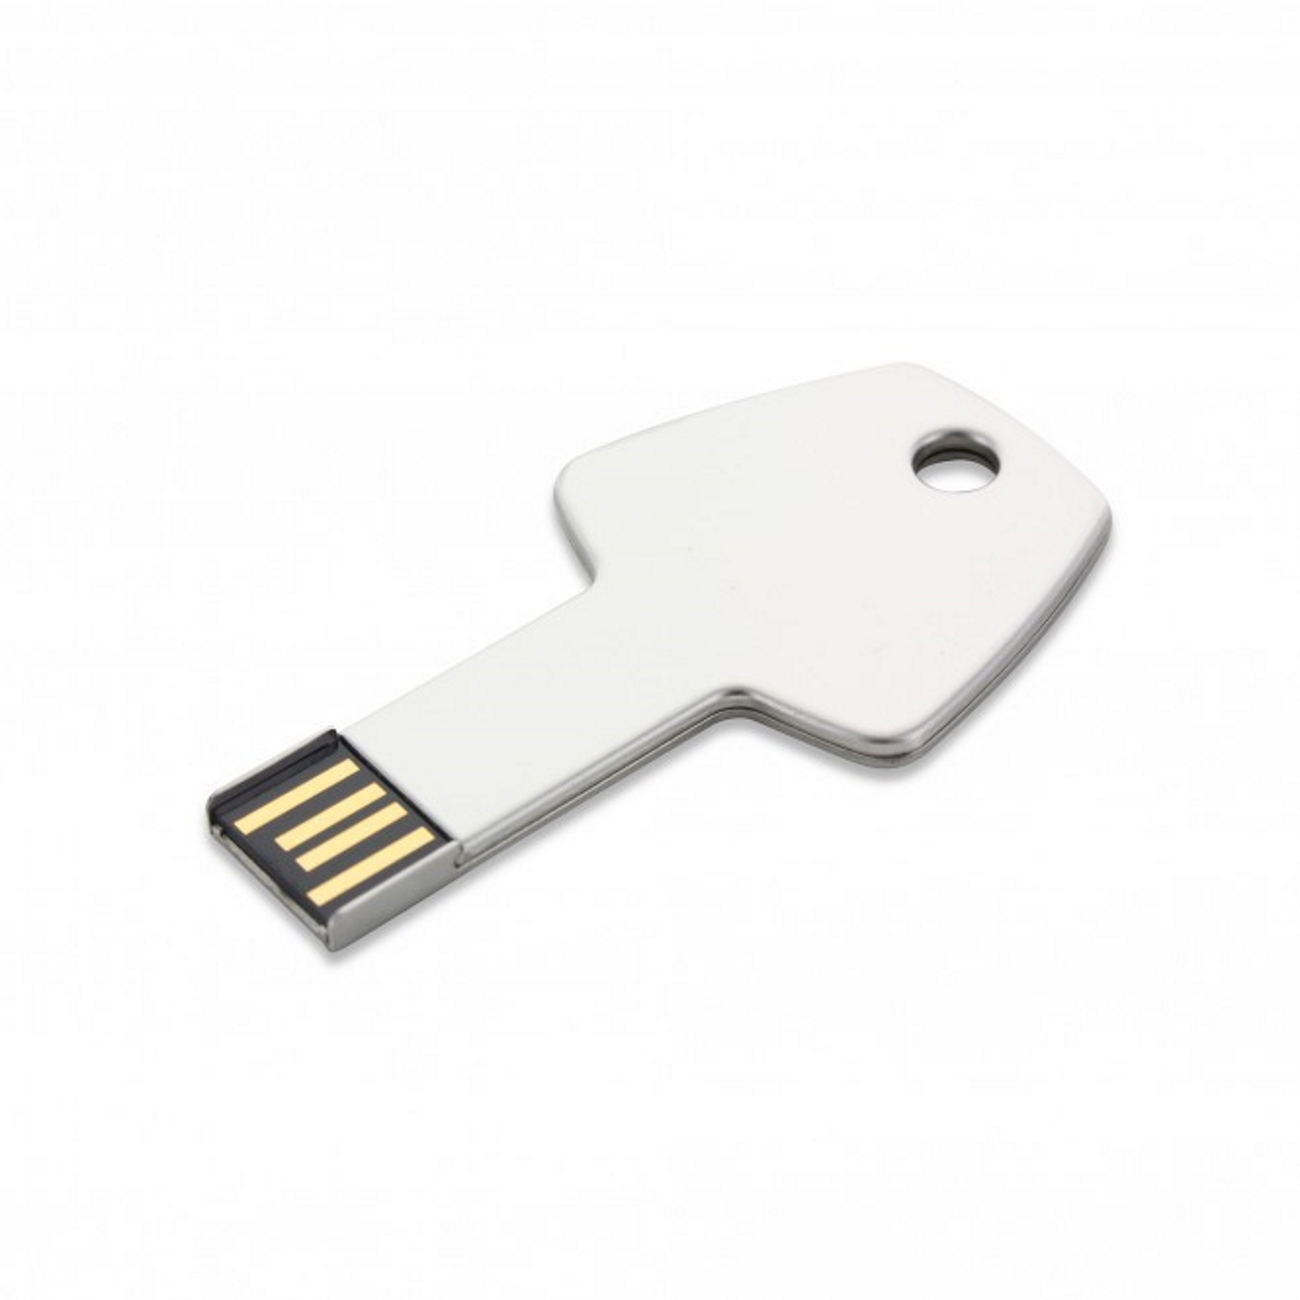 USB GERMANY ®Schlüssel Key USB-Stick GB) (Silber, 4